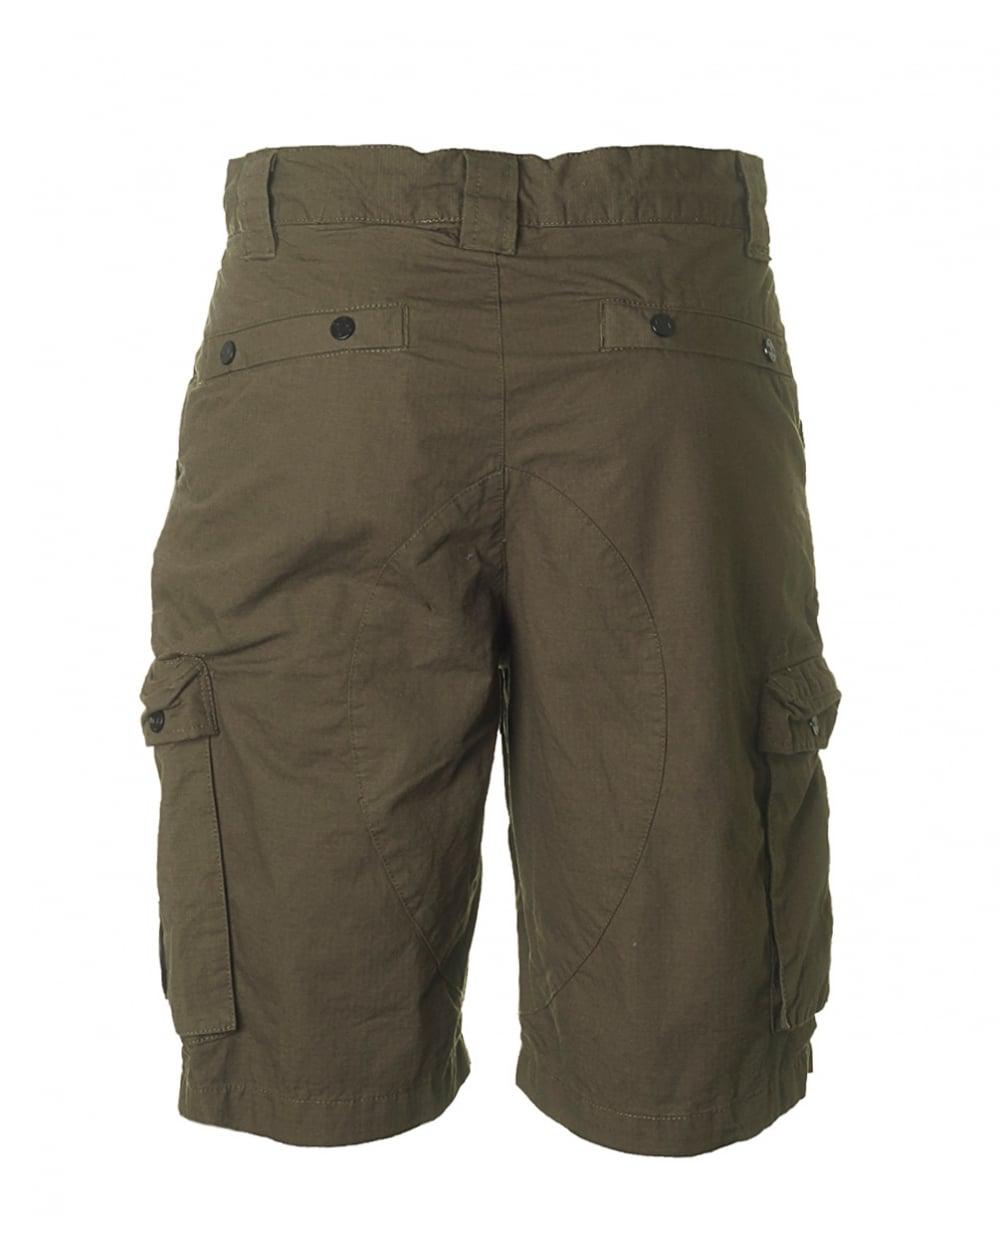 Marshall Artist Cotton Ripstop Cargo Shorts in Khaki (Green) for Men - Lyst